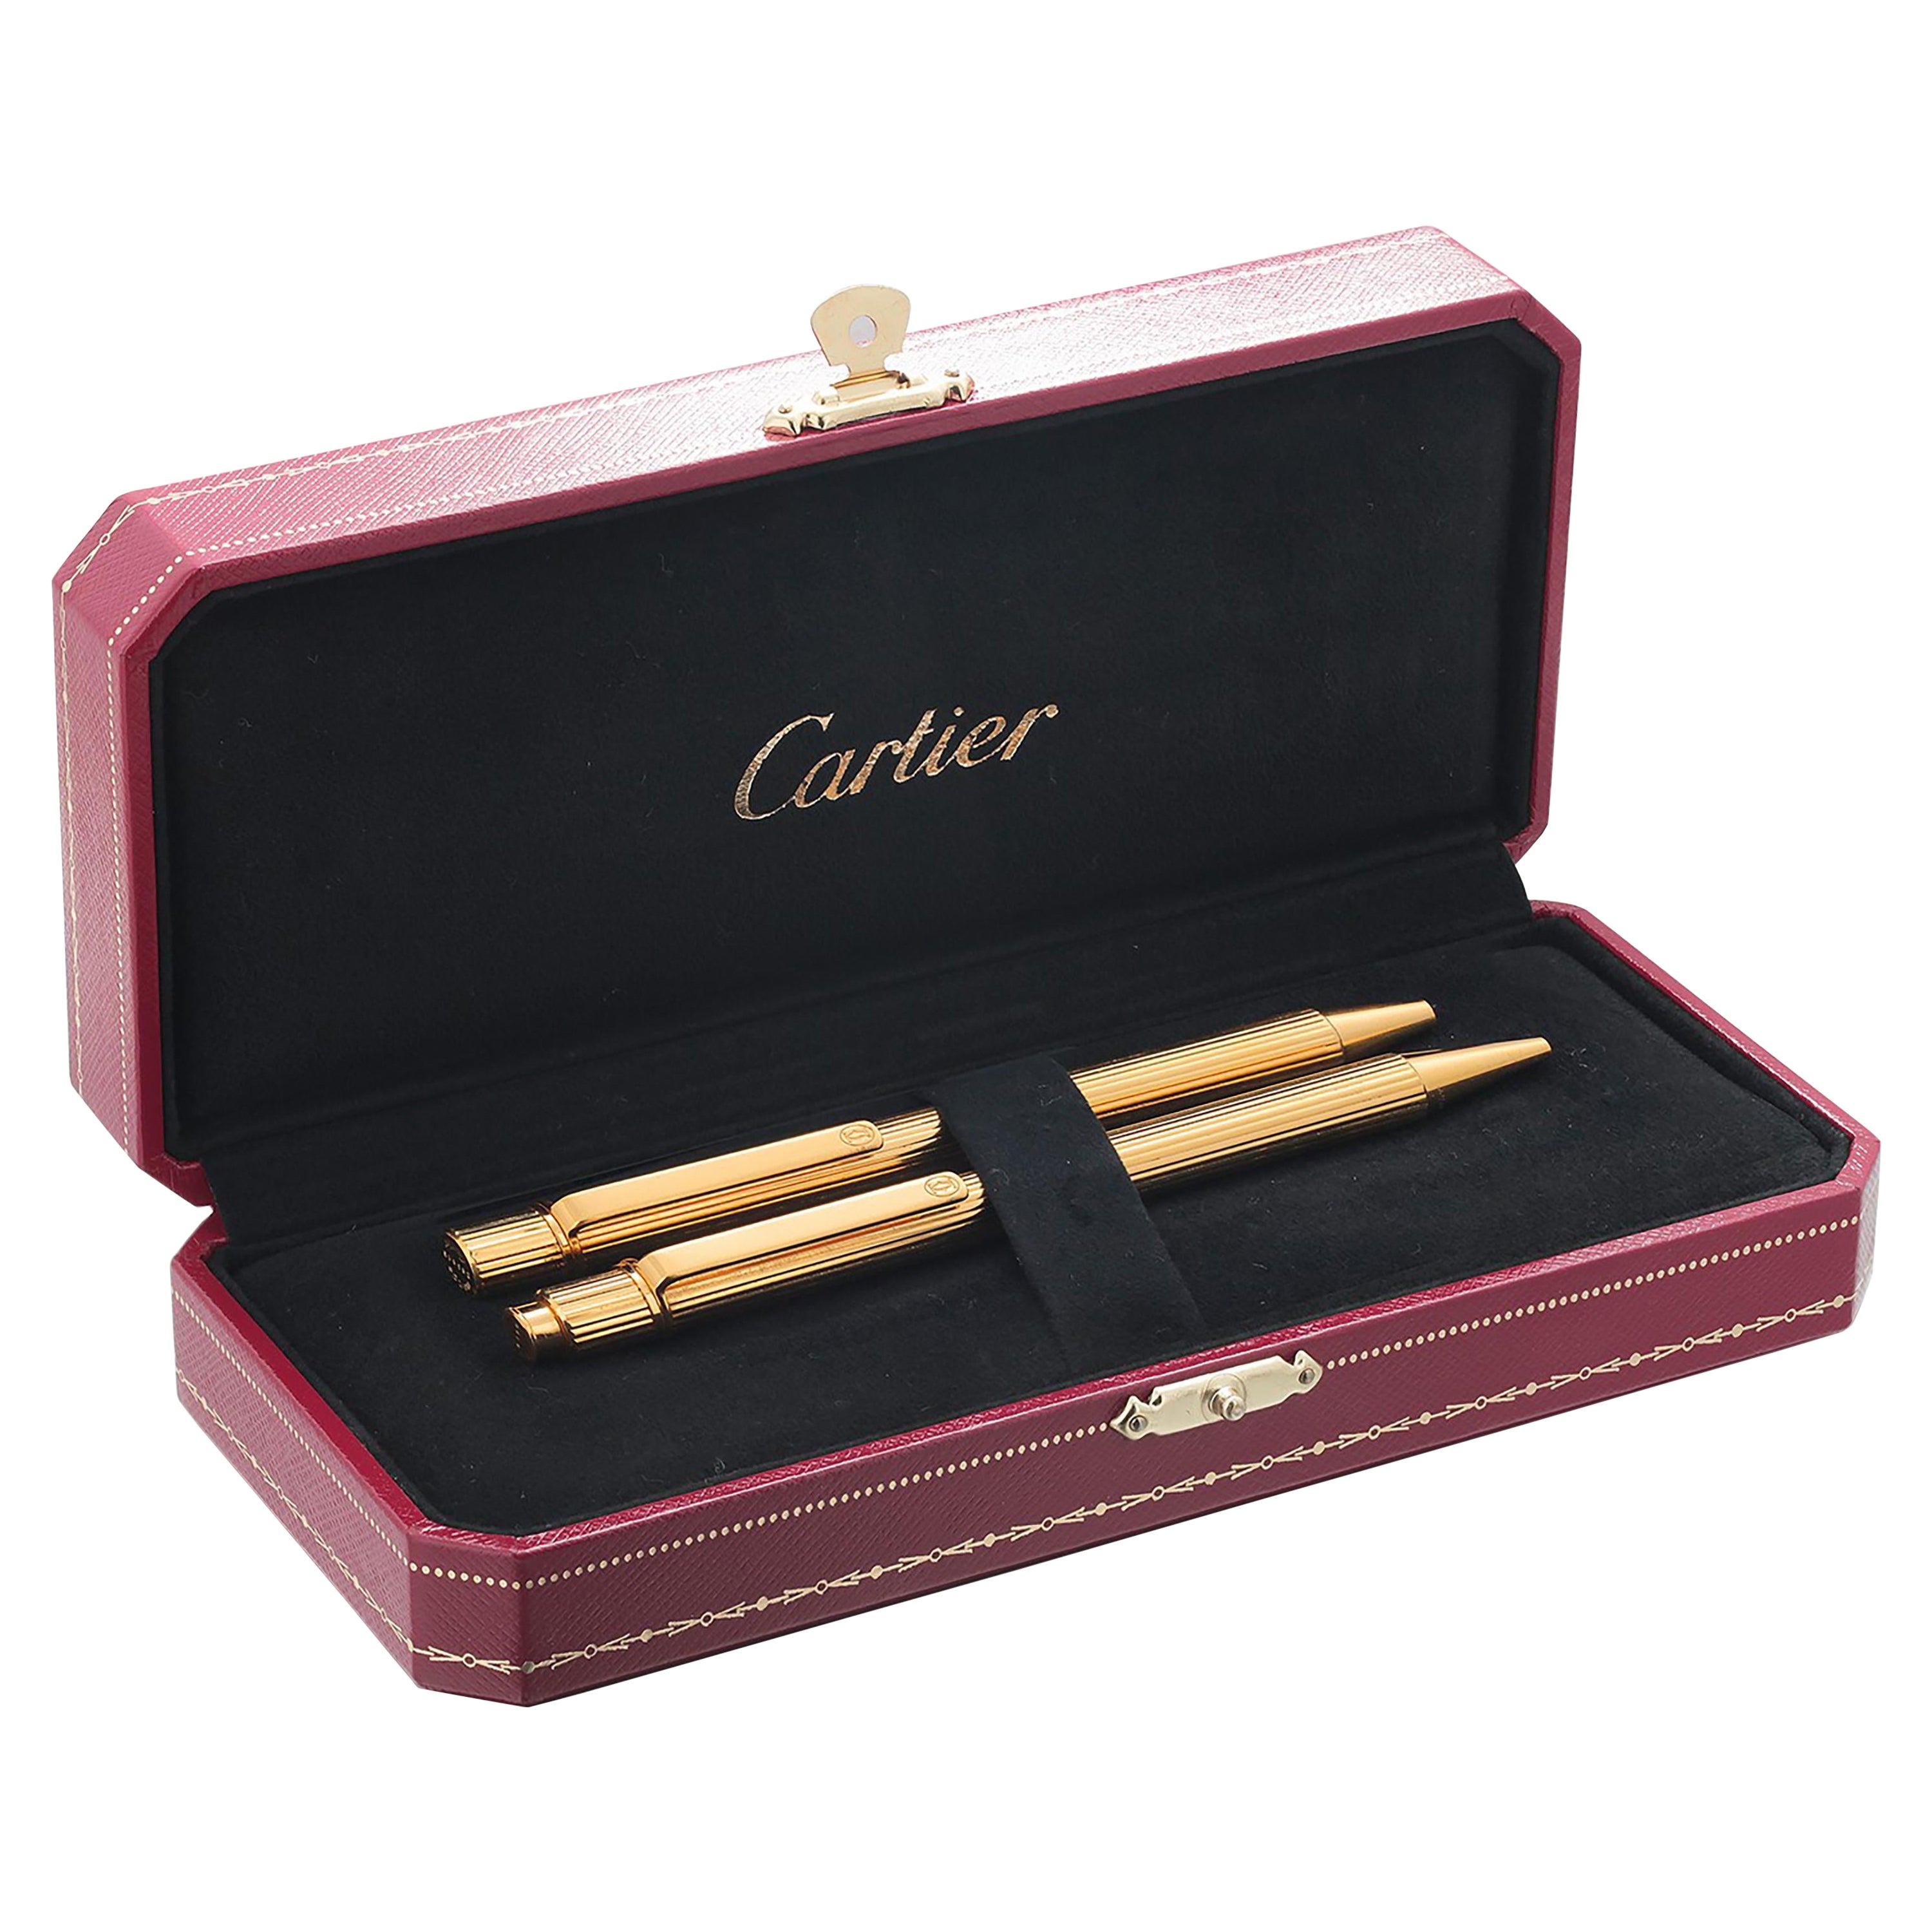 Must De Cartier Set aus goldenen Schreibinstrumenten, Kugelschreiber und mechanischem Bleistift